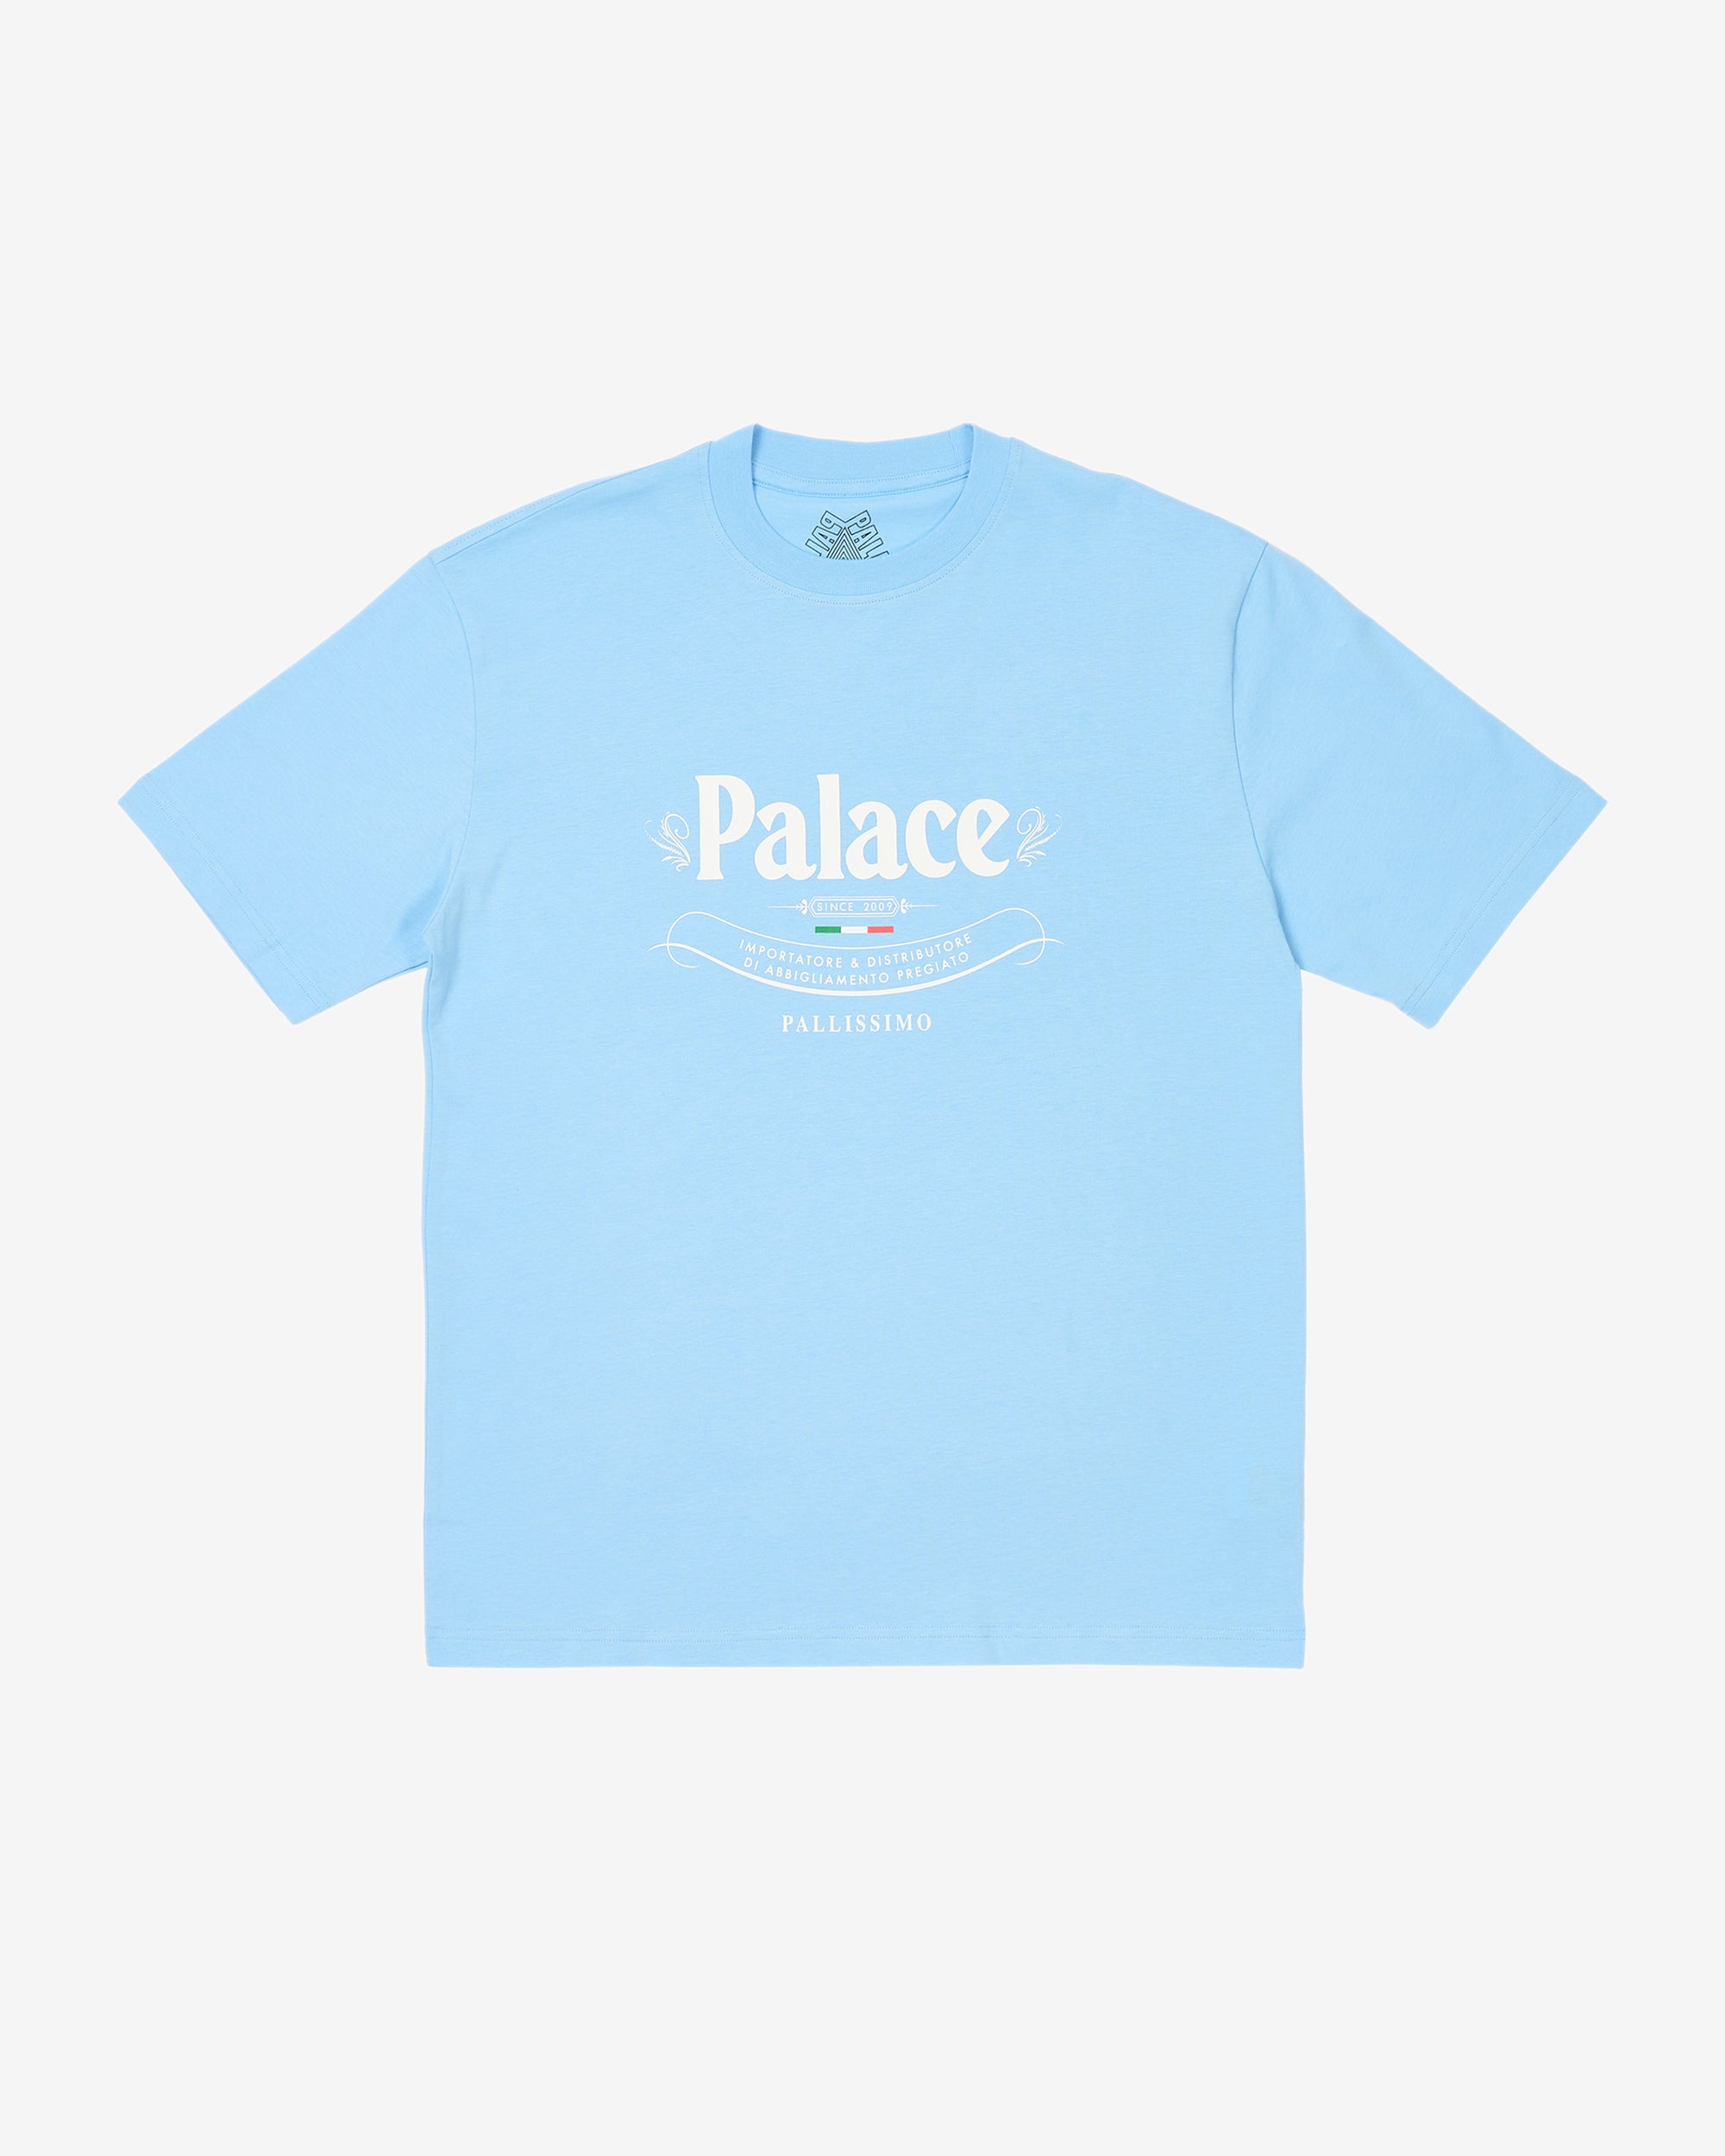 Palace - Men's Pallissimo T-Shirt - (Fresh Air) view 1